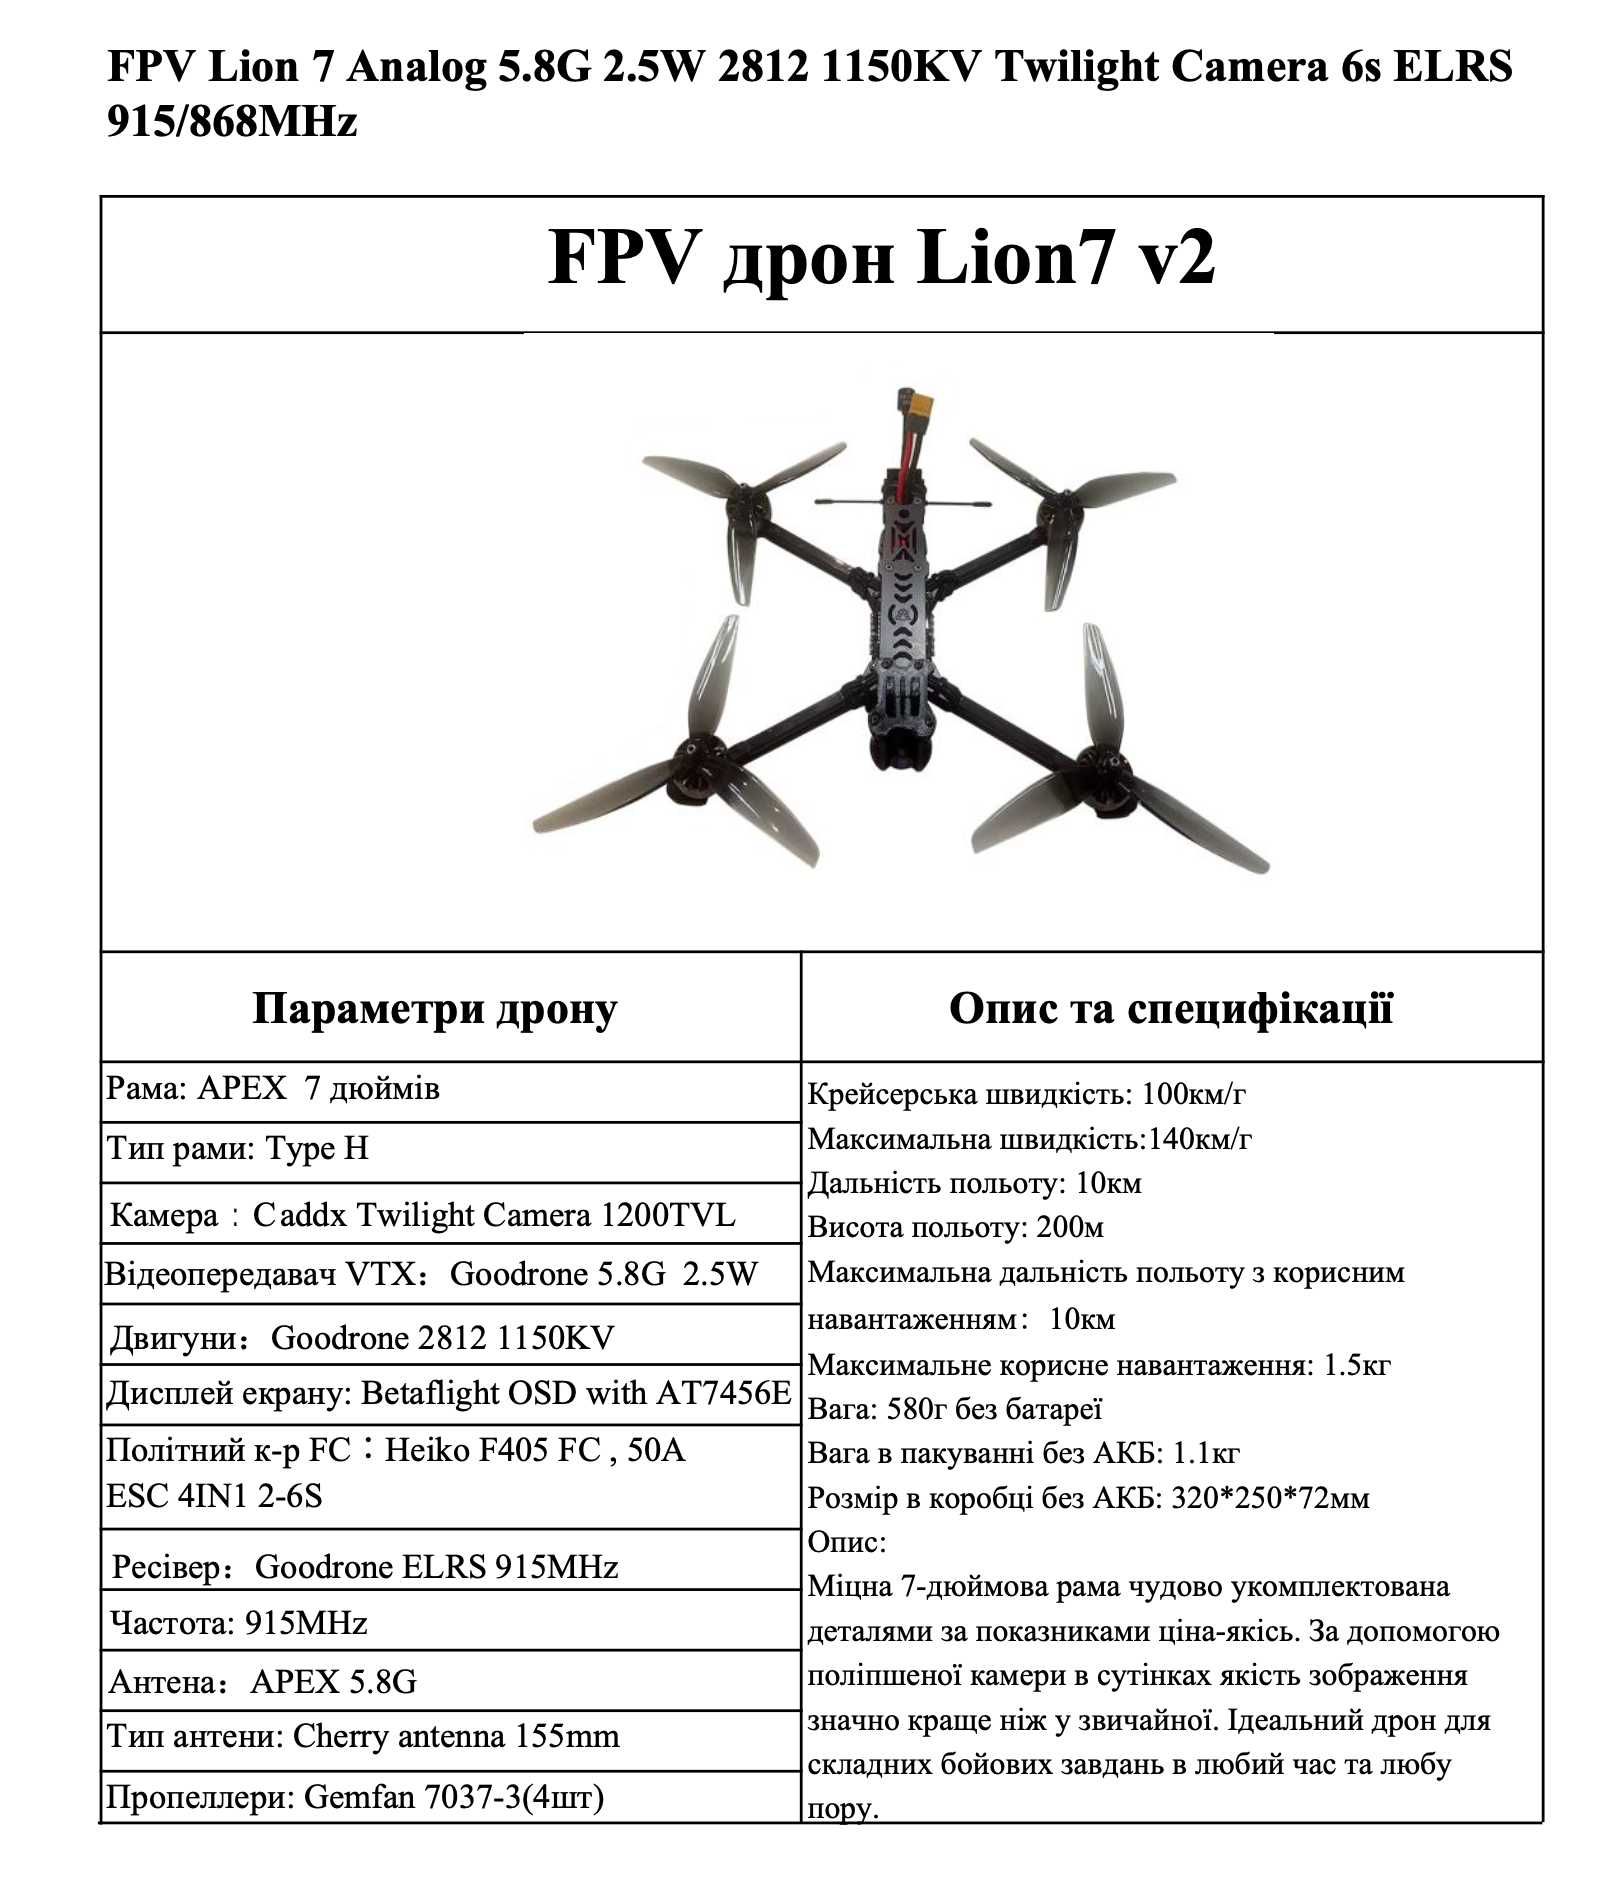 FPV Lion 7 Analog 5.8G 2.5W 2812 1150KV Twilight Camera 6s ELRS ОПТ!